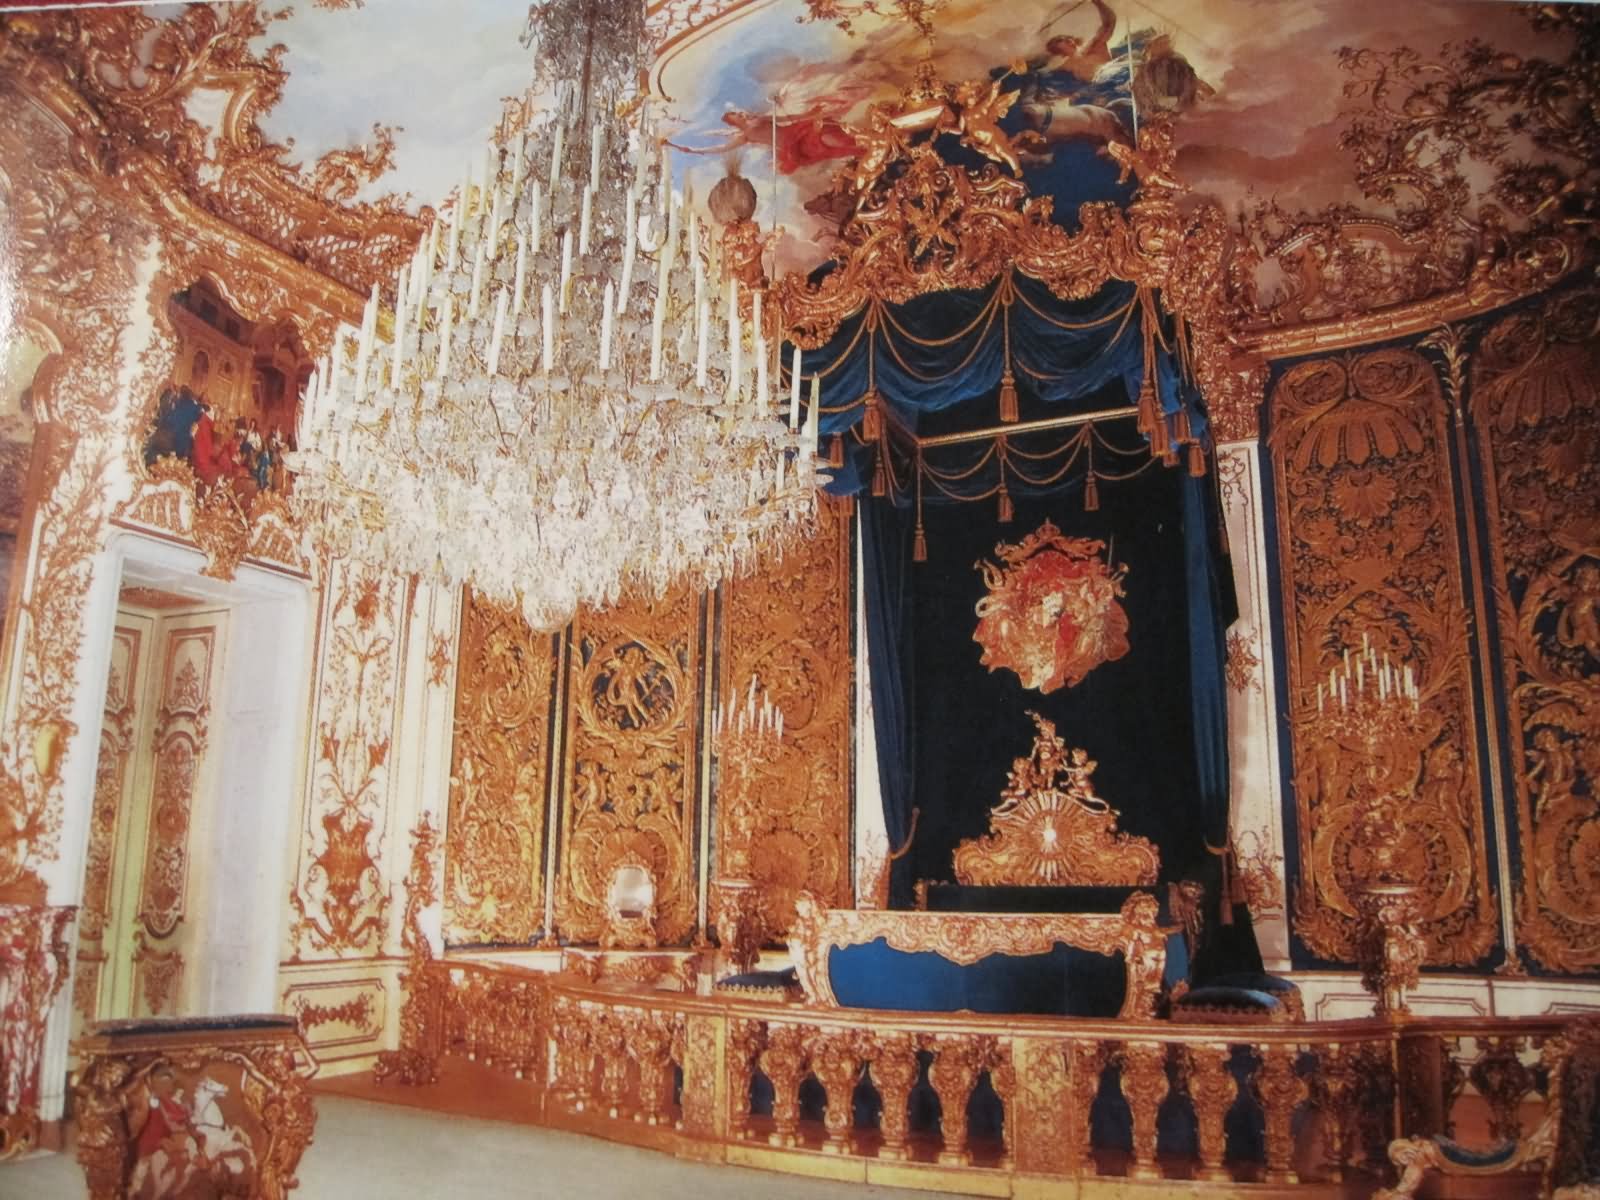 King Ludwigs Bedroom Inside The Linderhof Palace In Bavaria